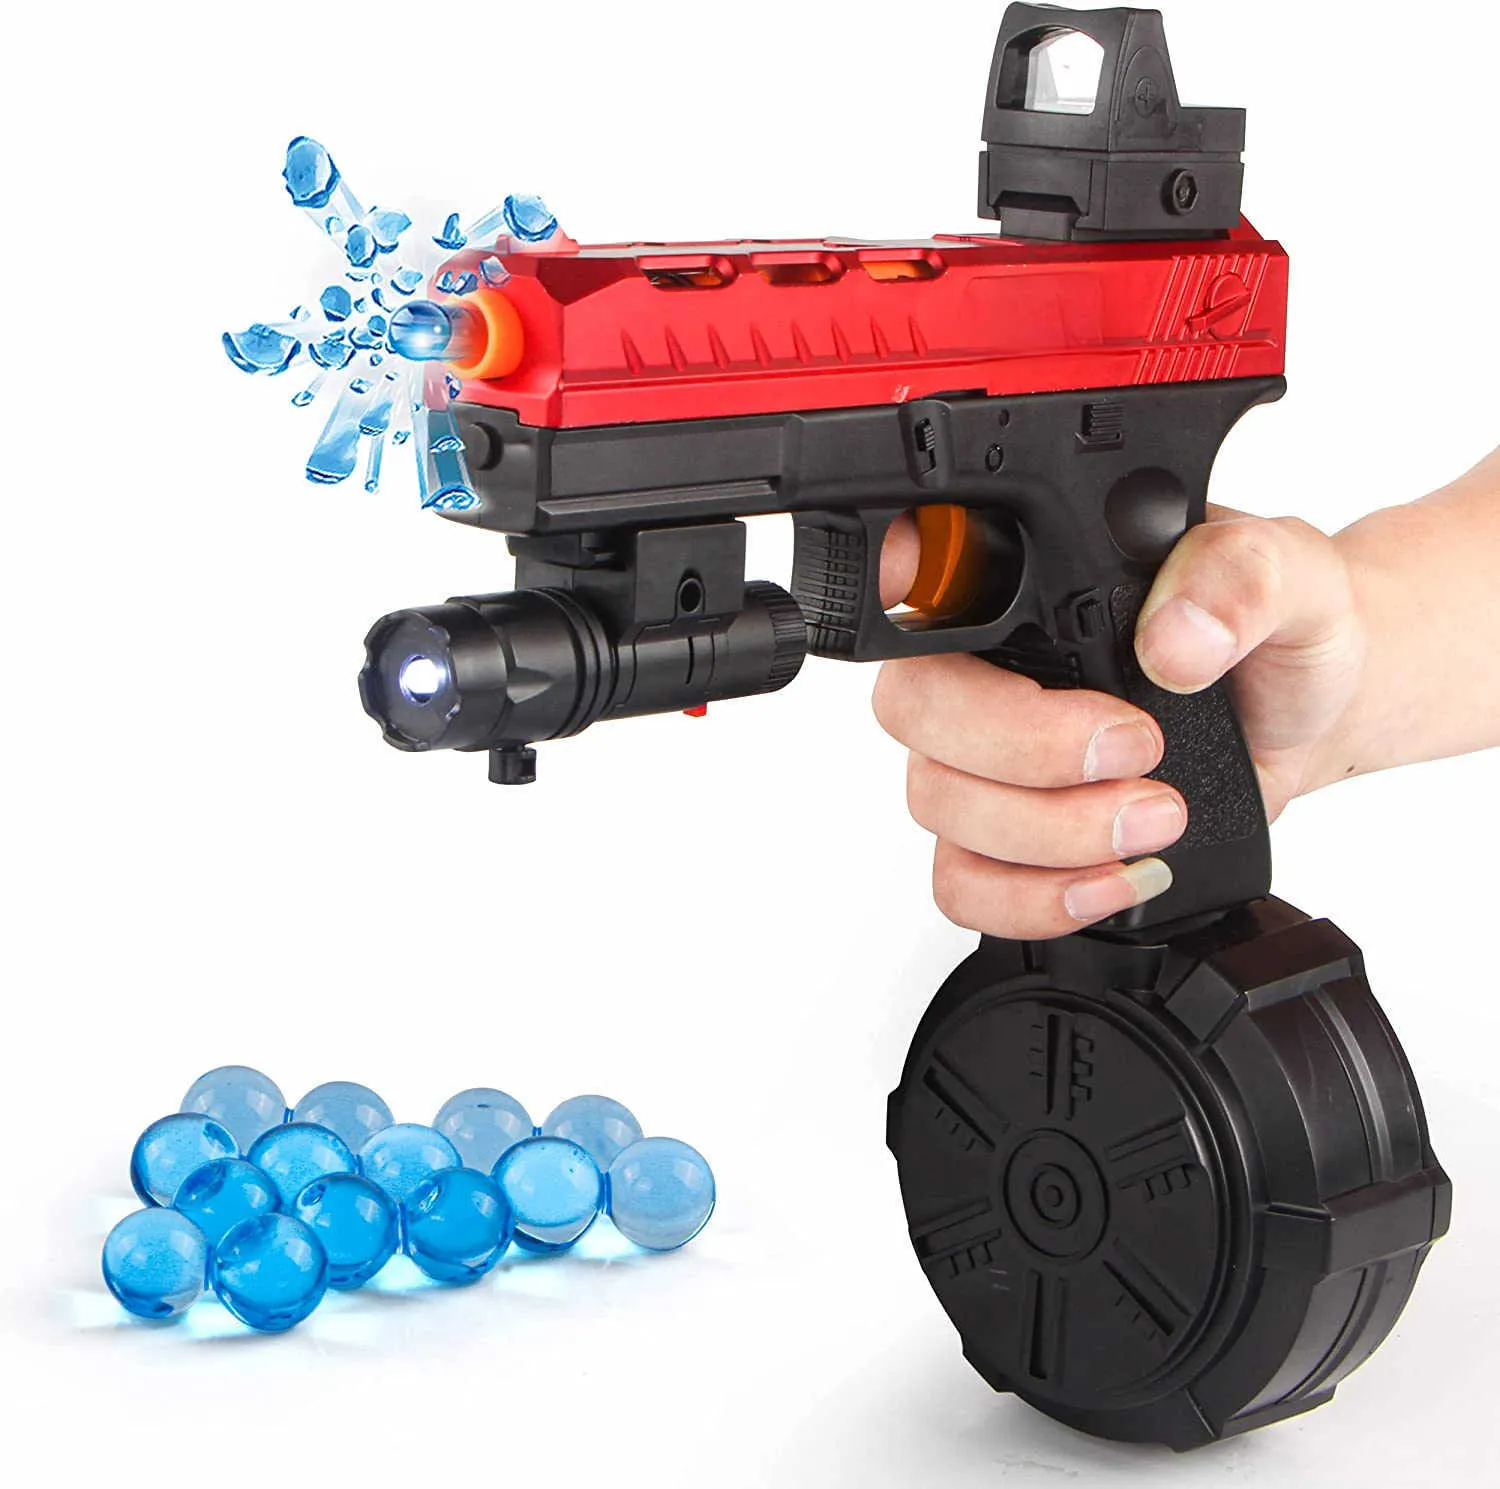 Sand Play Water Fun 2 in 1 Glock Gel Blaster Electric Beads Toy Gun Splatter Ball Airsoft Pistola Outdoor Game Pistol For Adults Children Z0523